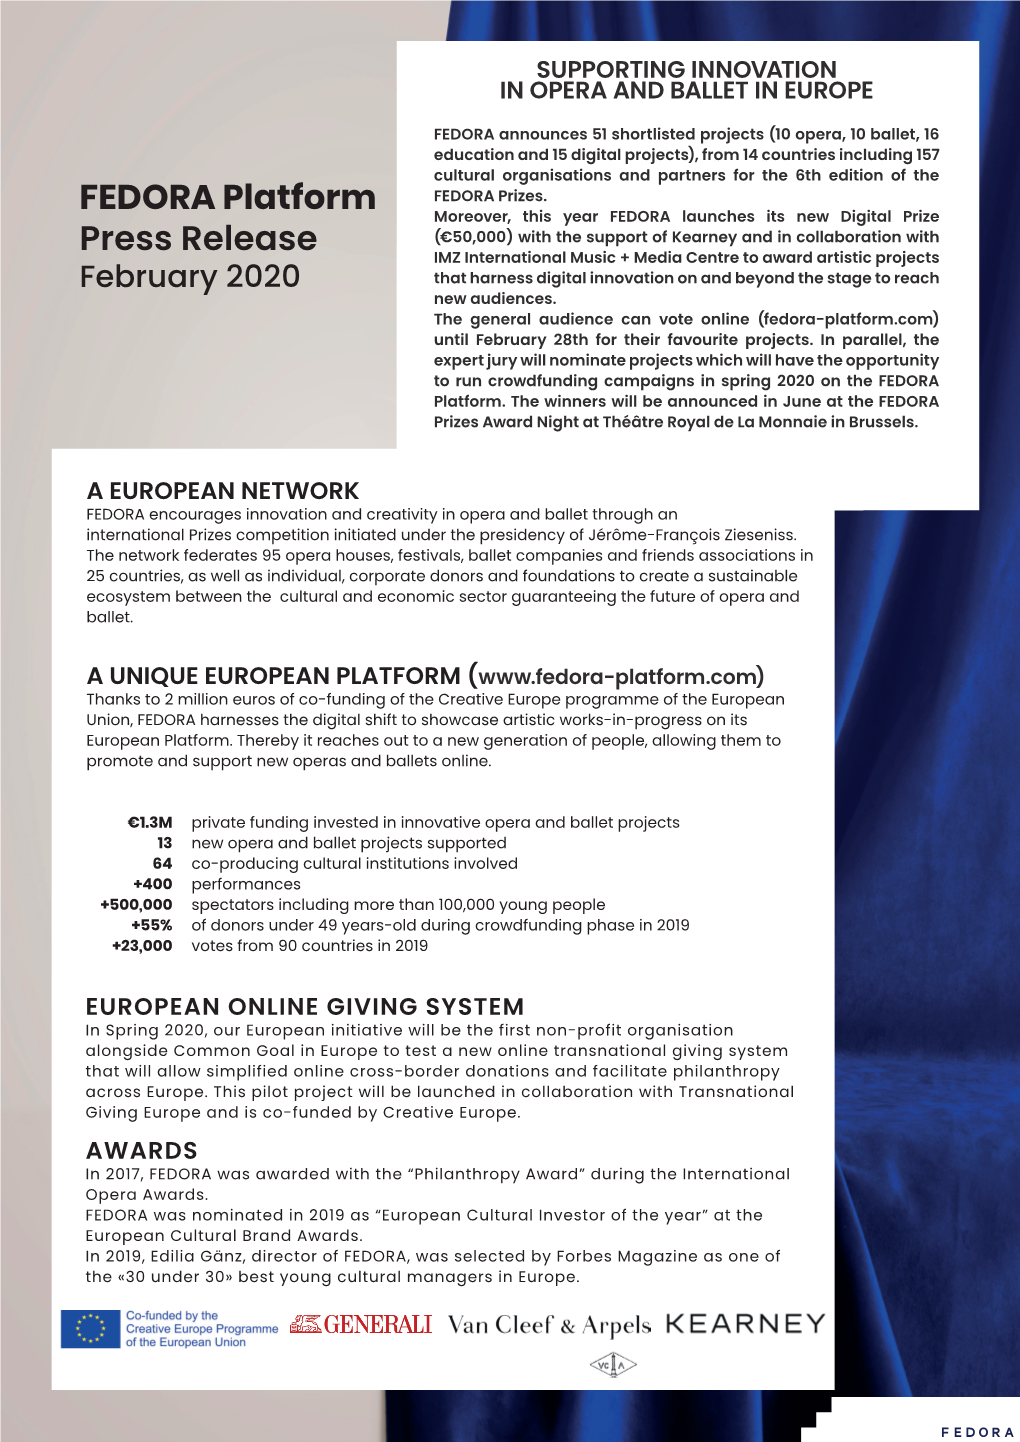 FEDORA Platform Press Release